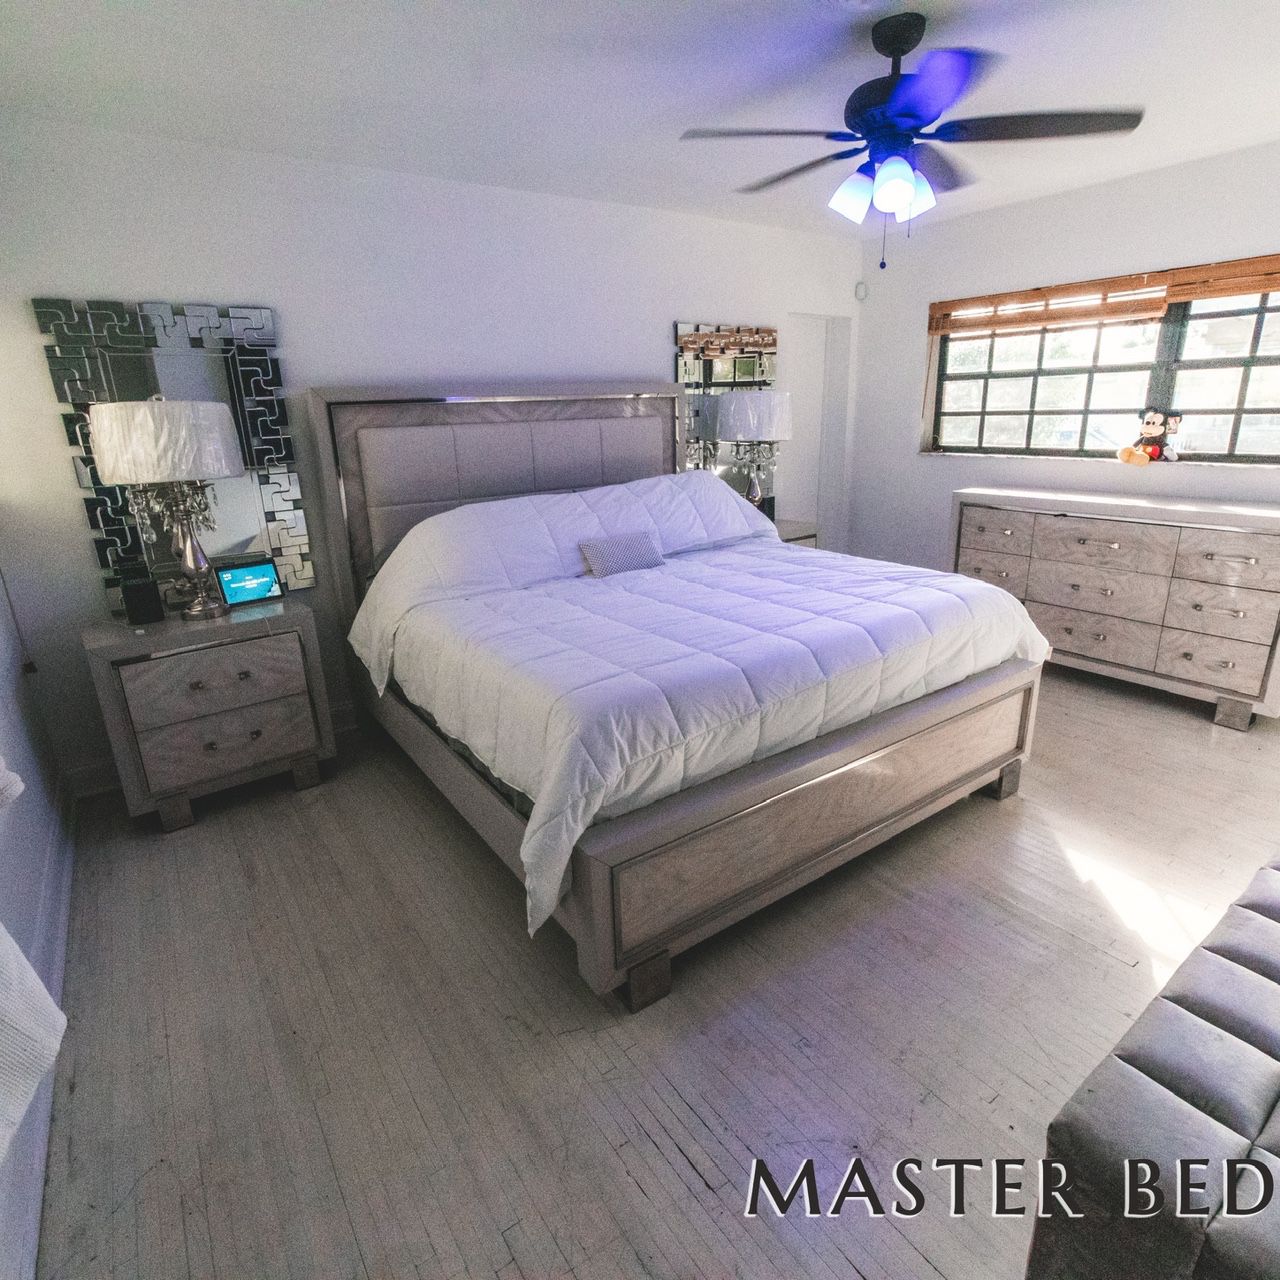 Master Bedroom 5 Piece Set - Dresser & Night Tables Included Mattress Too FULL SET 